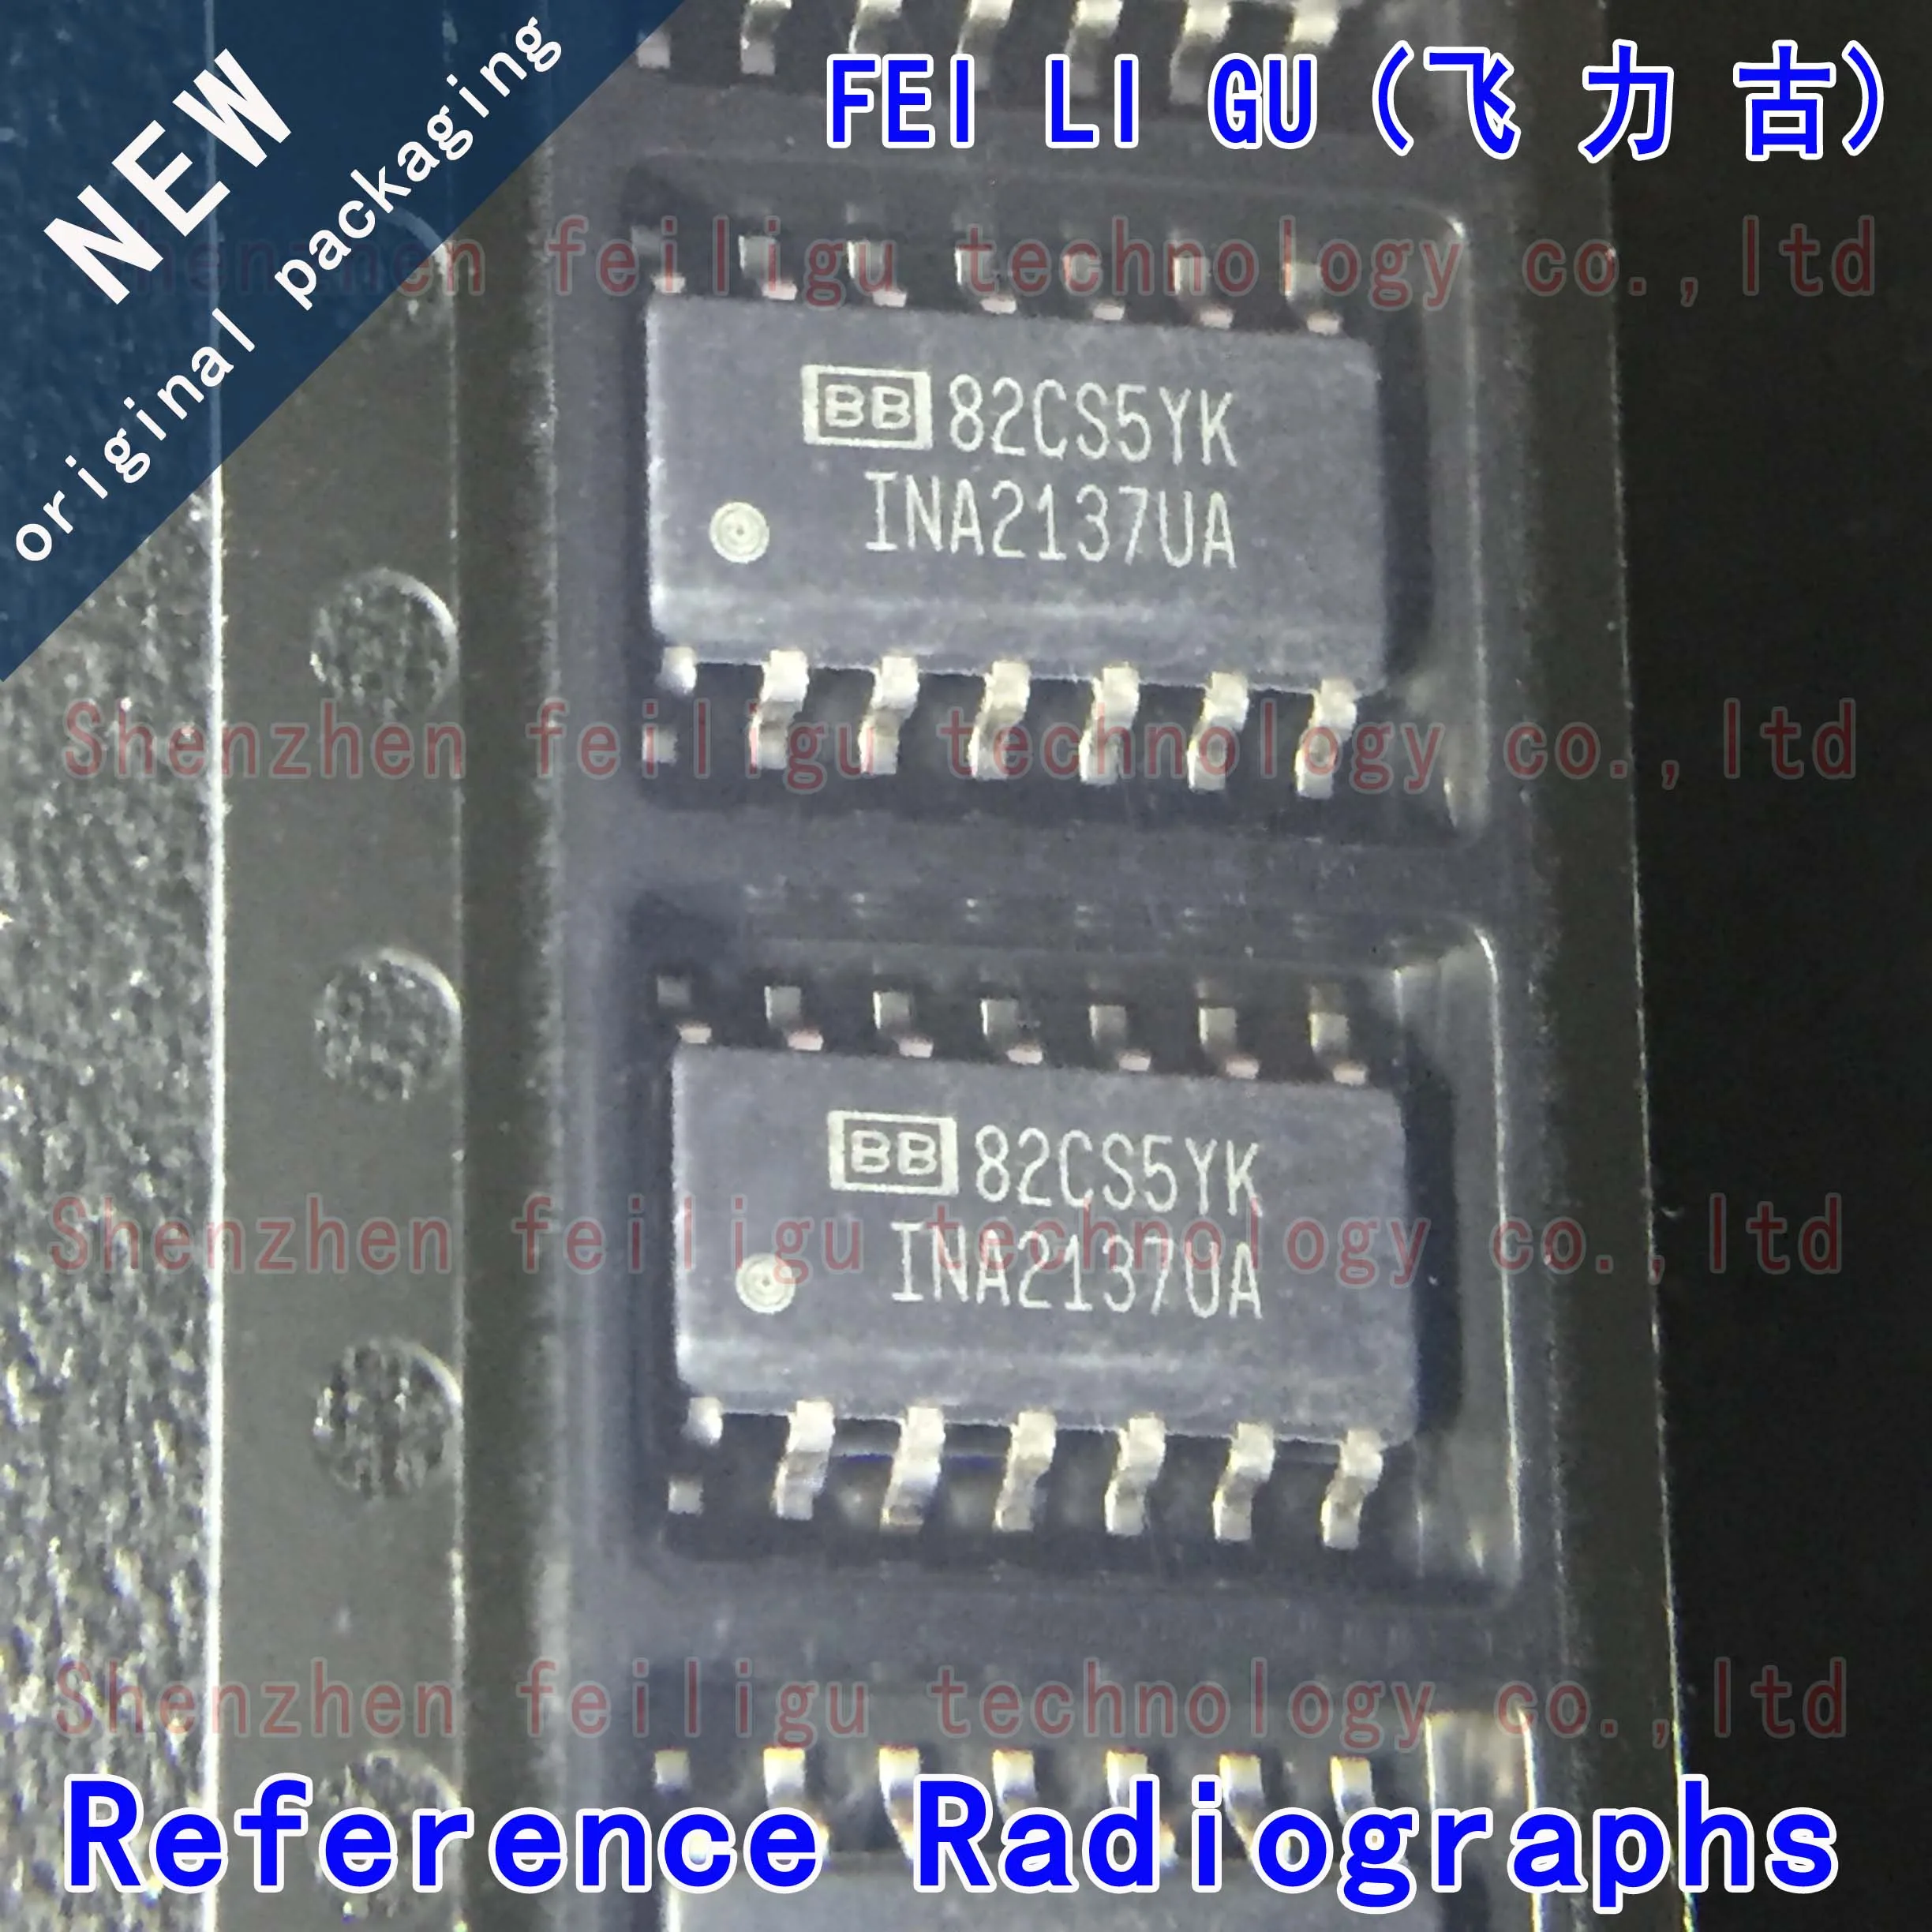 1pcs lot new originai adl5324arkz r7 adl5324arkz sot89 radio frequency amplifier chip 1PCS 100% New original INA2137UA/2K5 INA2137UA INA2137U INA2137 Package:SOP14 Audio Power Amplifier Chip